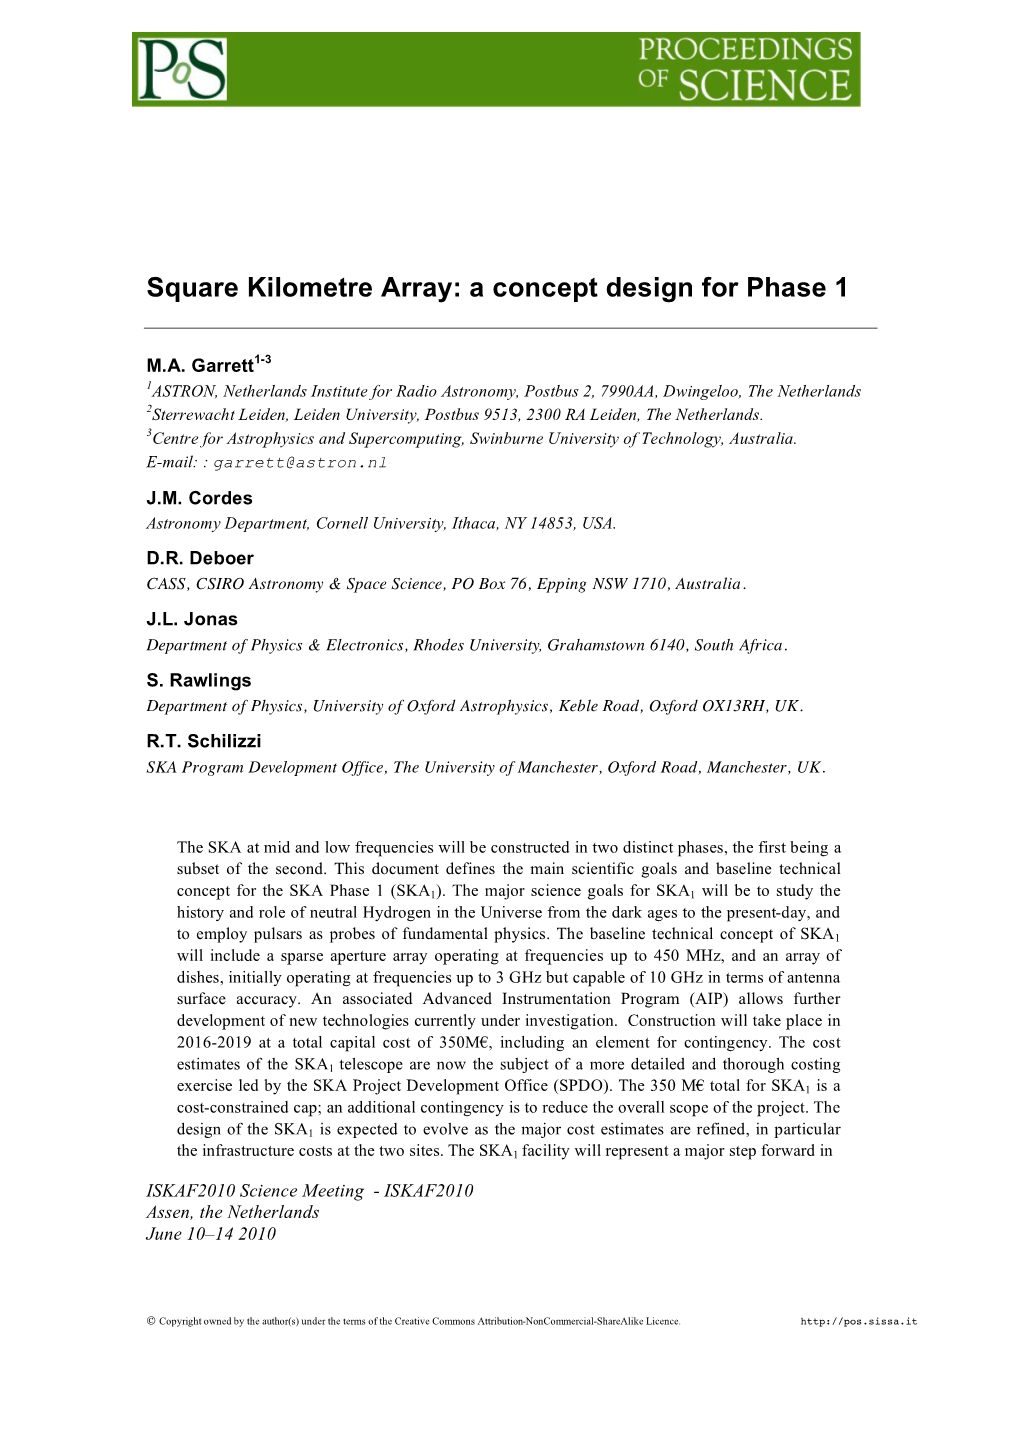 Square Kilometre Array: a Concept Design for Phase 1